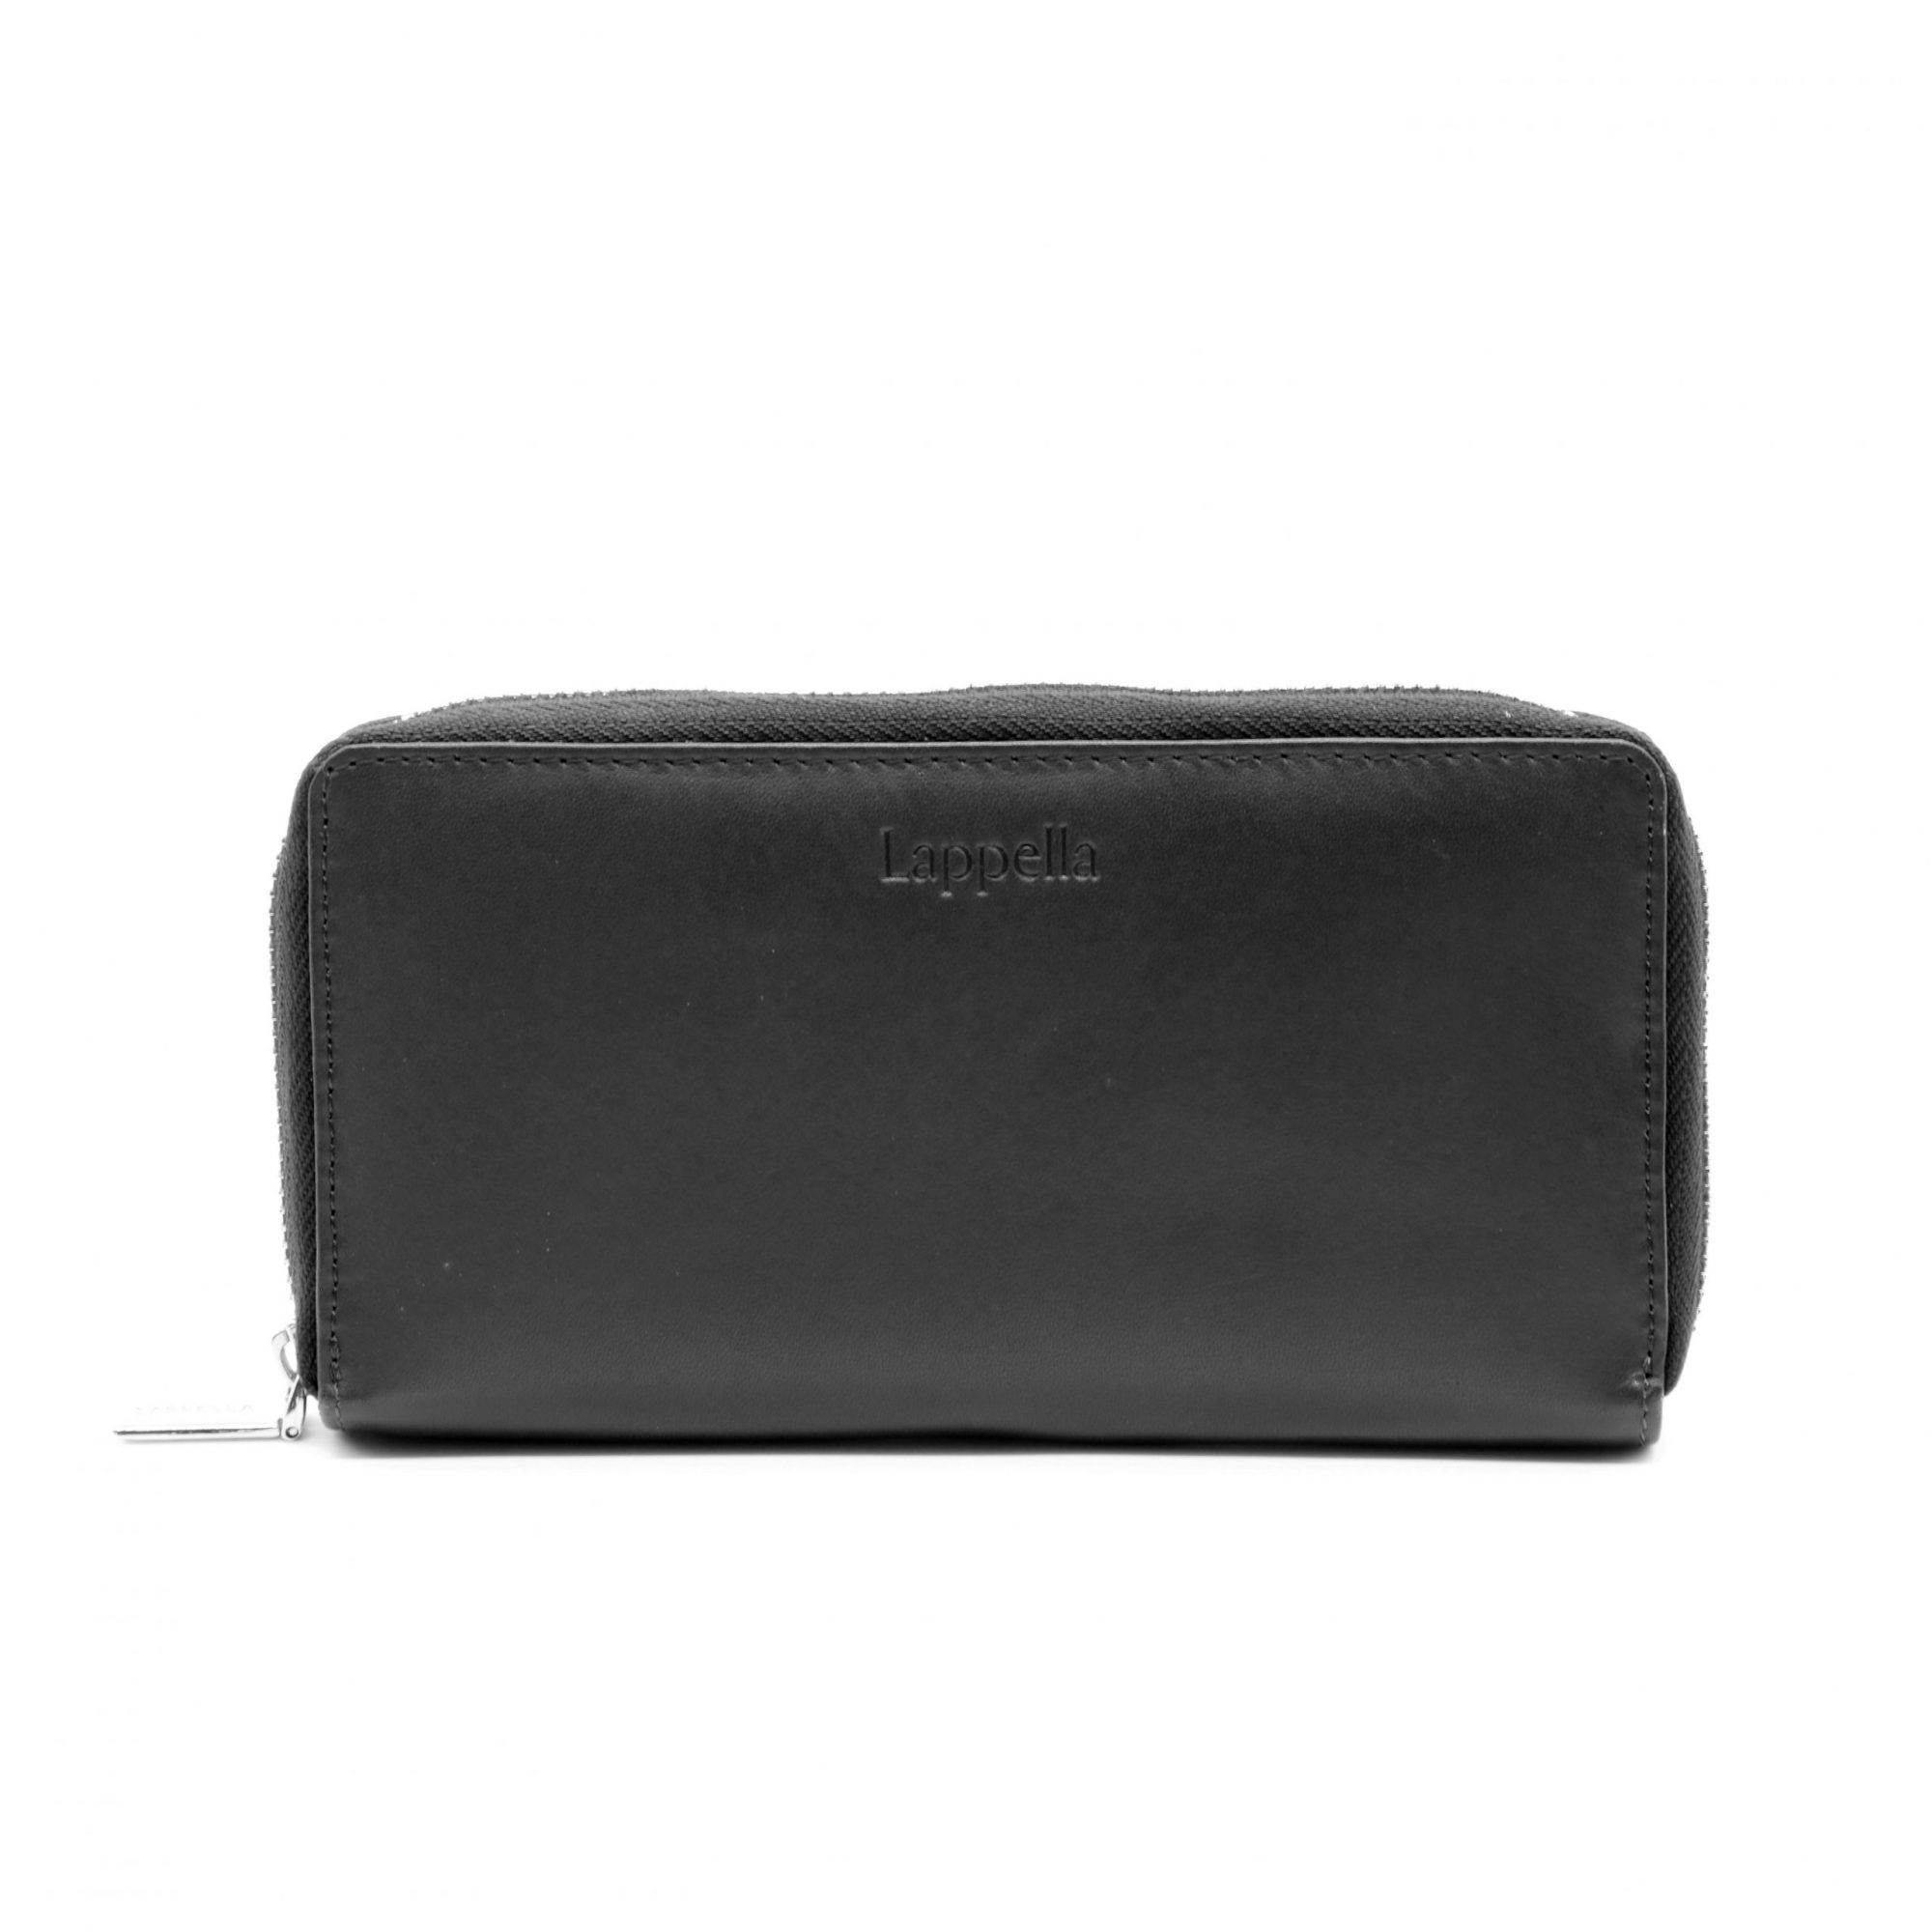 Lappella Emilia zip round purse in soft luxury leather in black